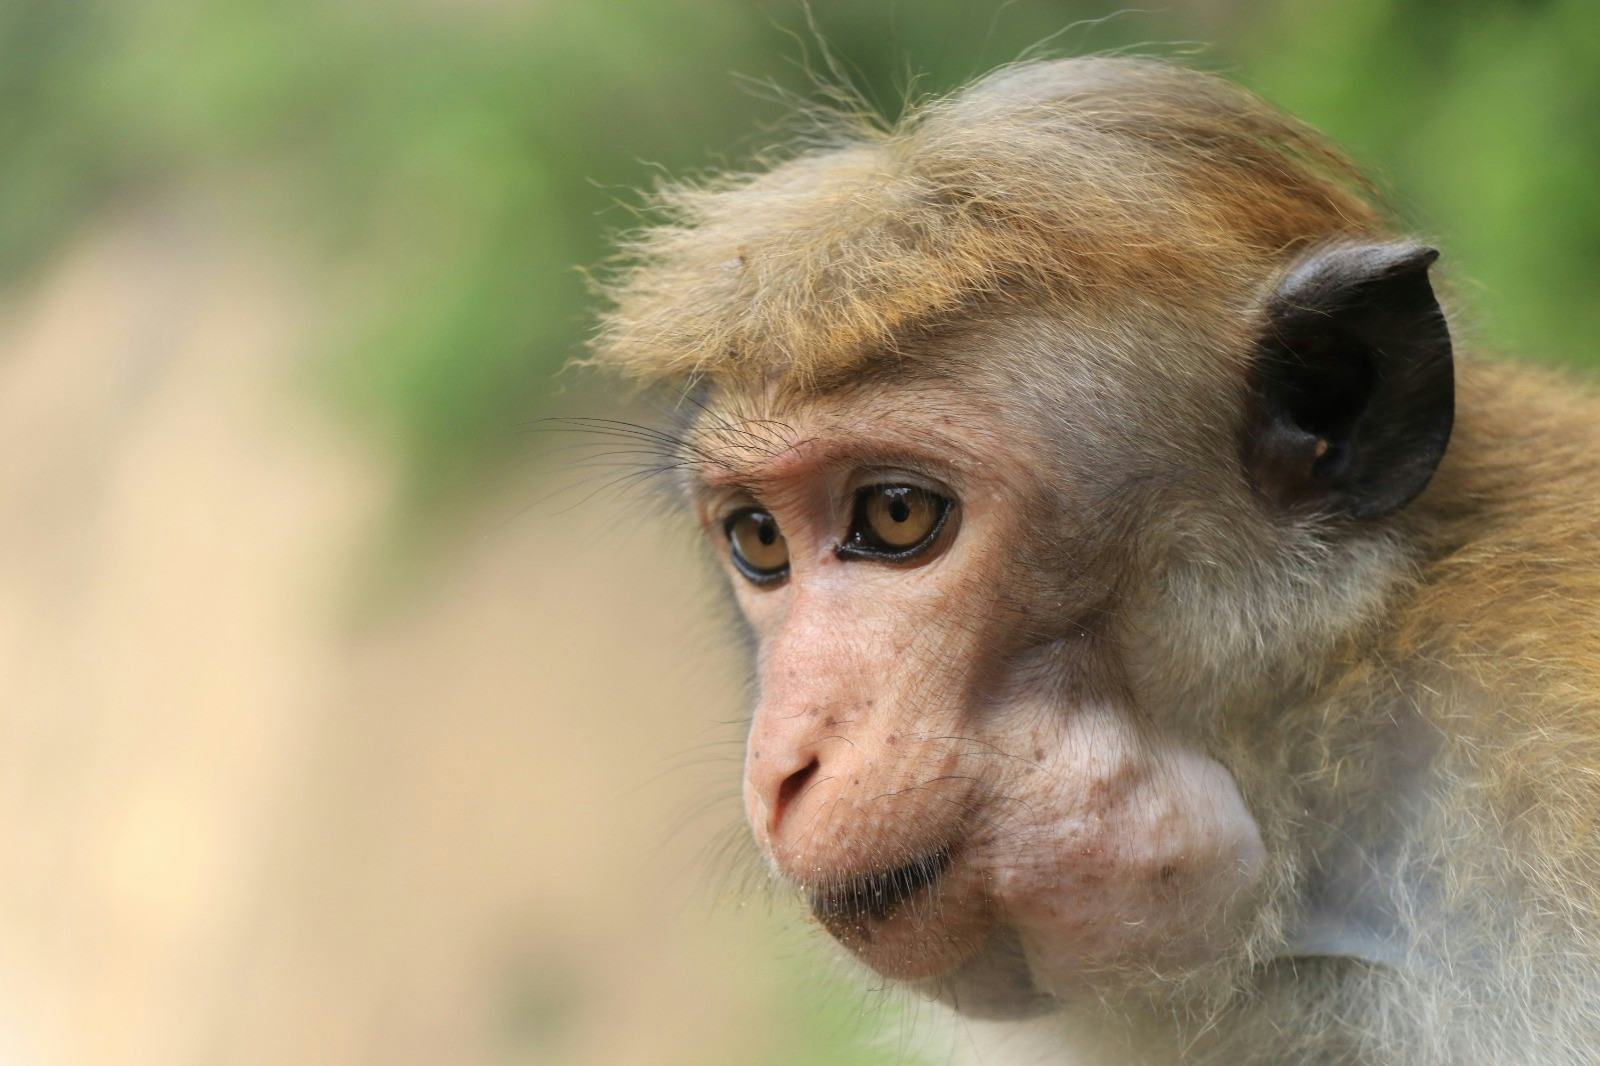 Crop losses: Mitigation strategies for crop-raiding monkeys 